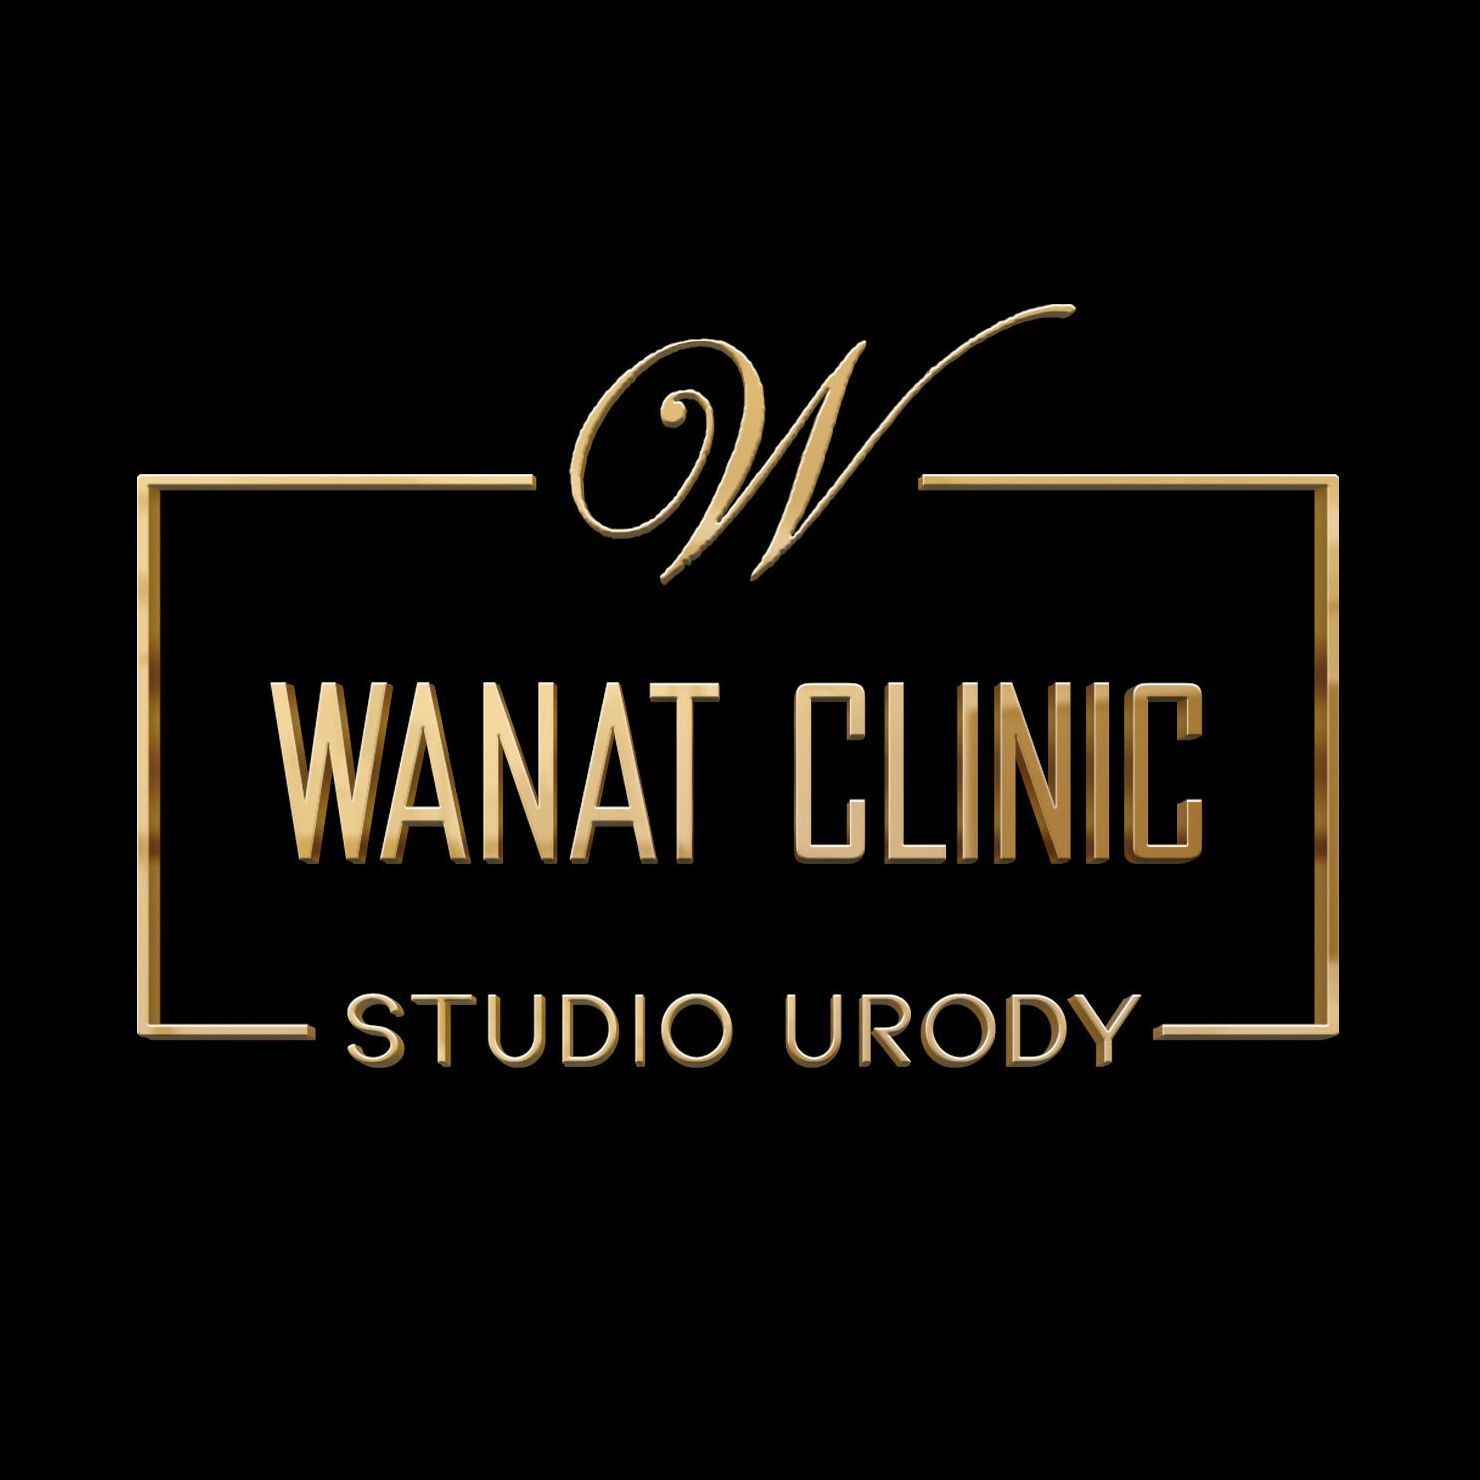 WanatClinic Studio Urody, prof. Stefana Hausbrandta 27u, 80-126, Gdańsk